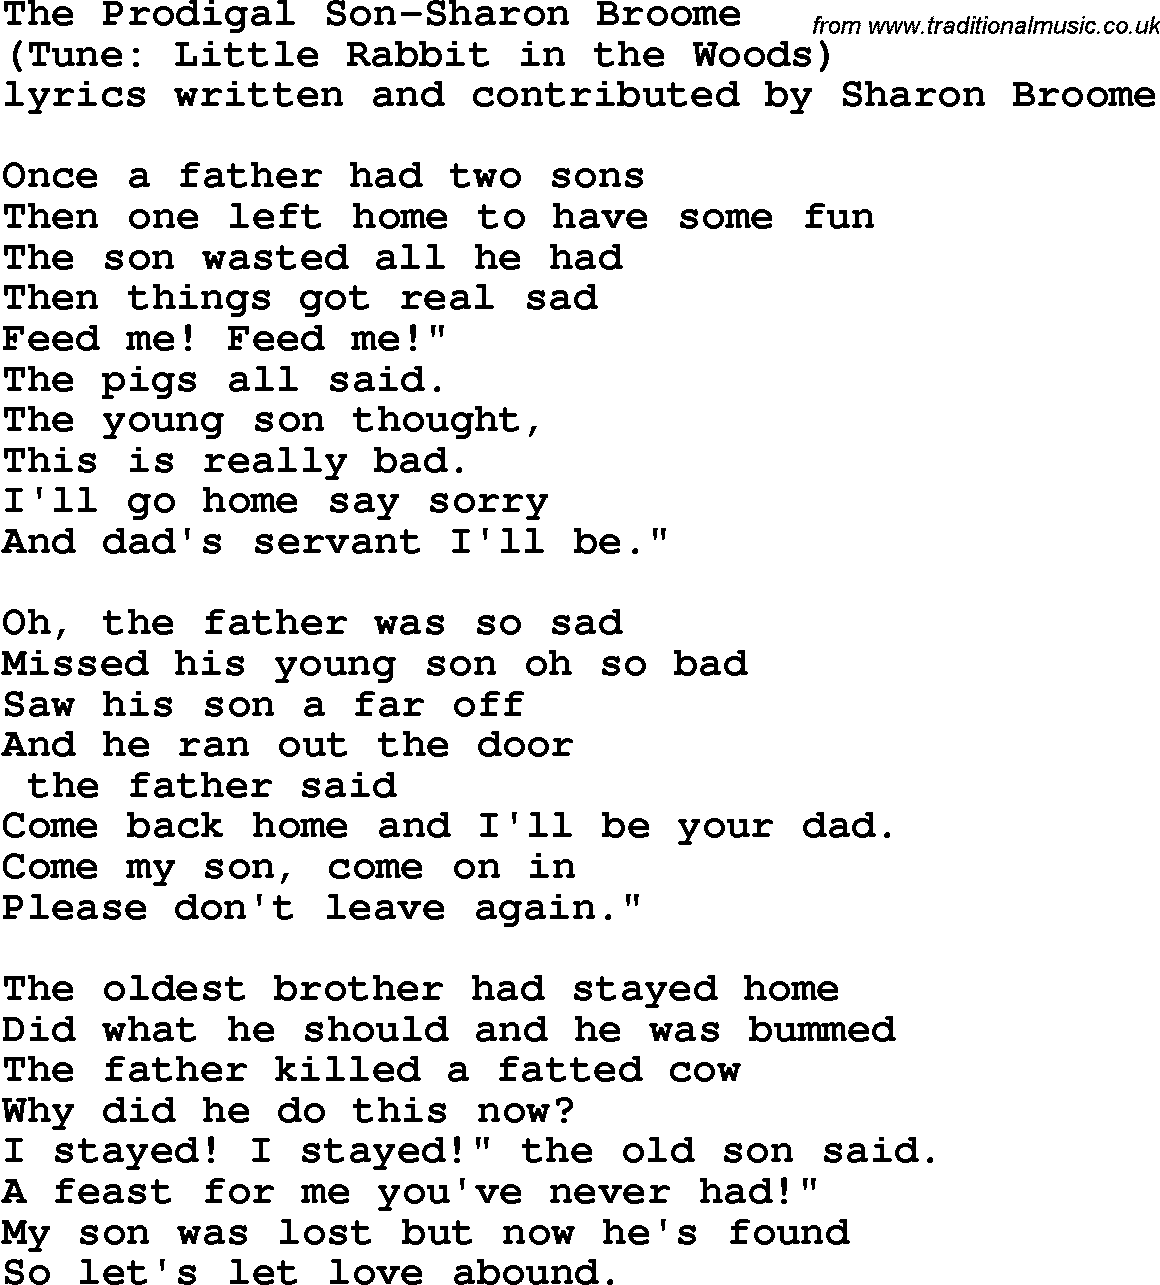 Christian Chlidrens Song The Prodigal Son-Sharon Broome Lyrics